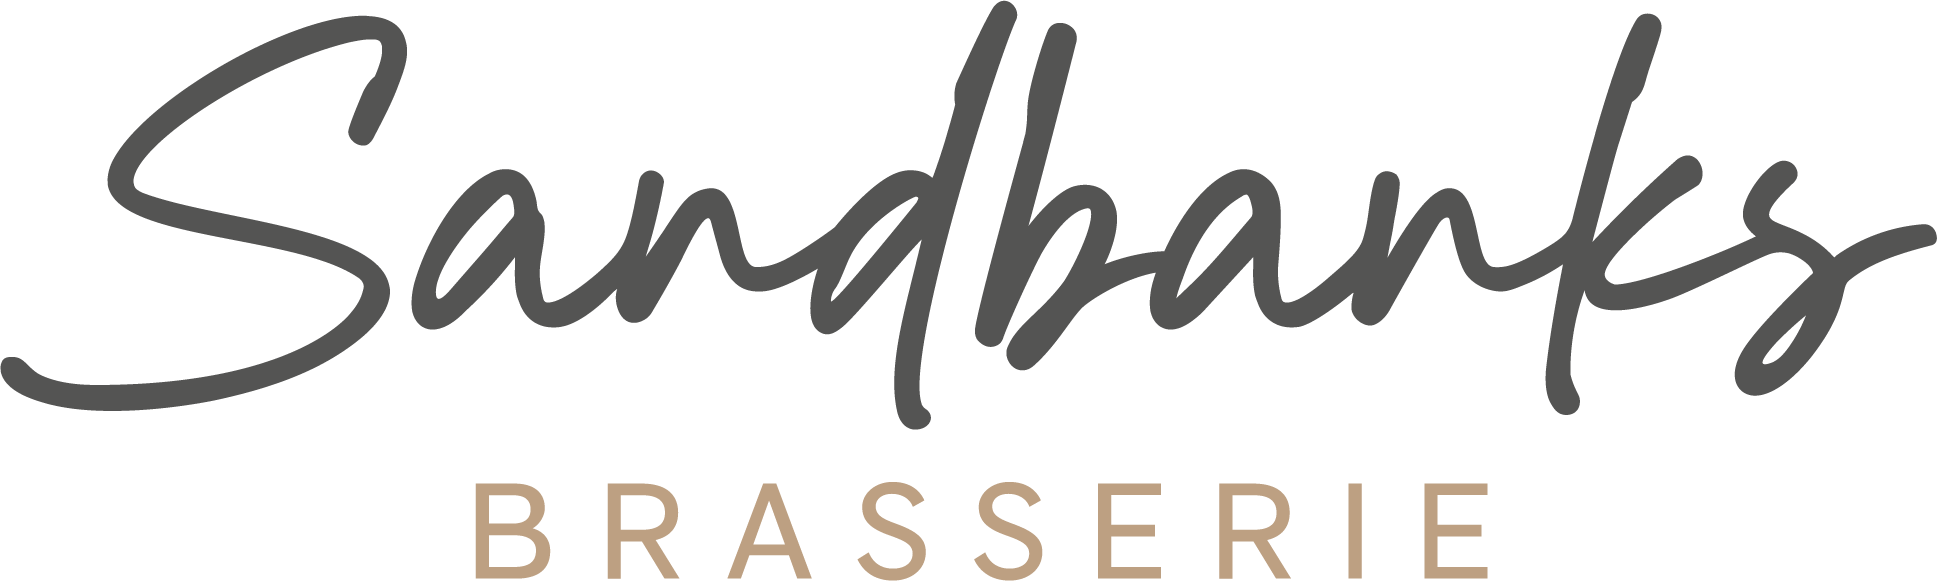 Sandbanks Brasserie